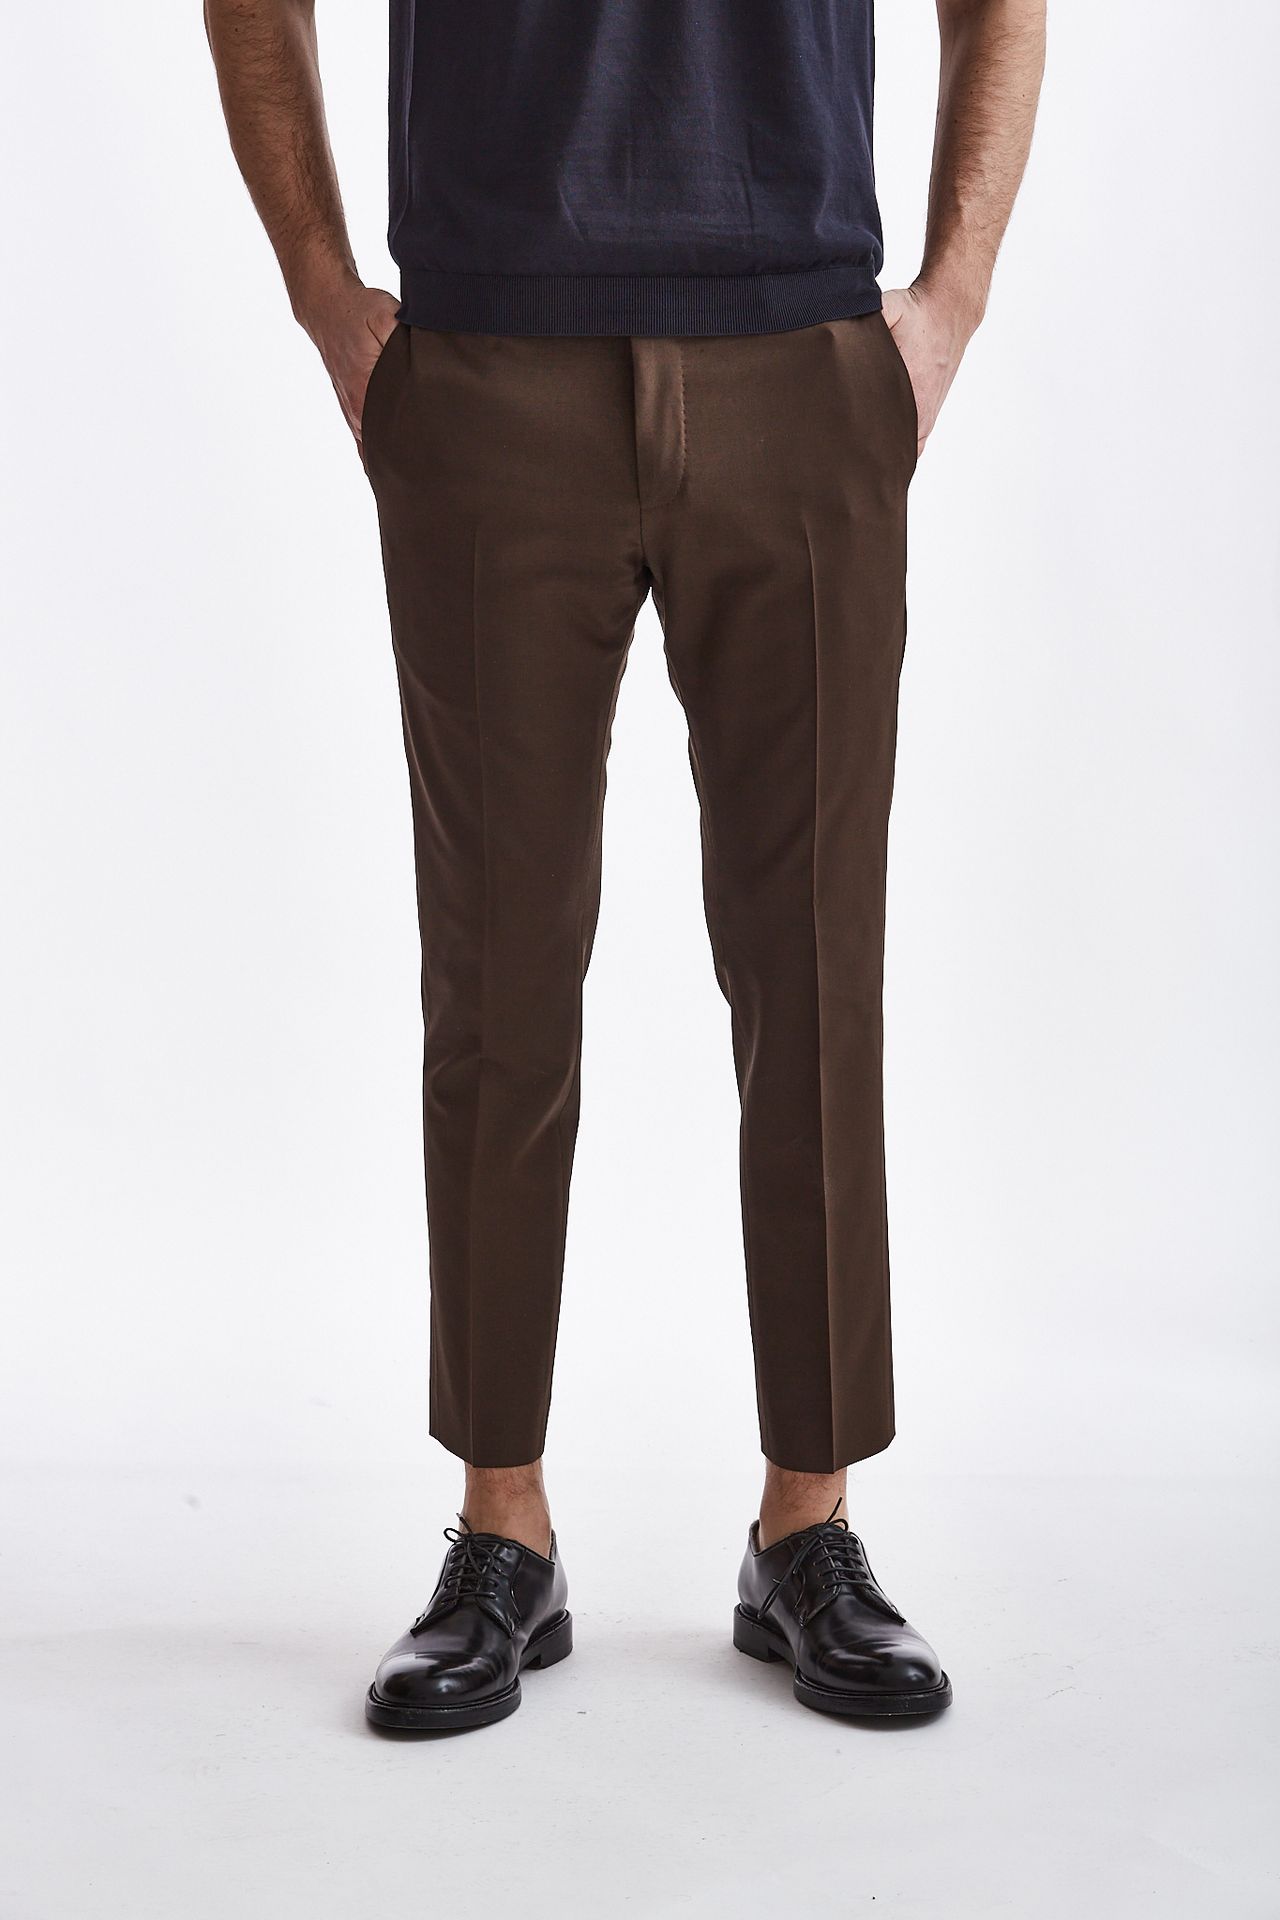 Pantalone EDGE-DIECI lana marrone